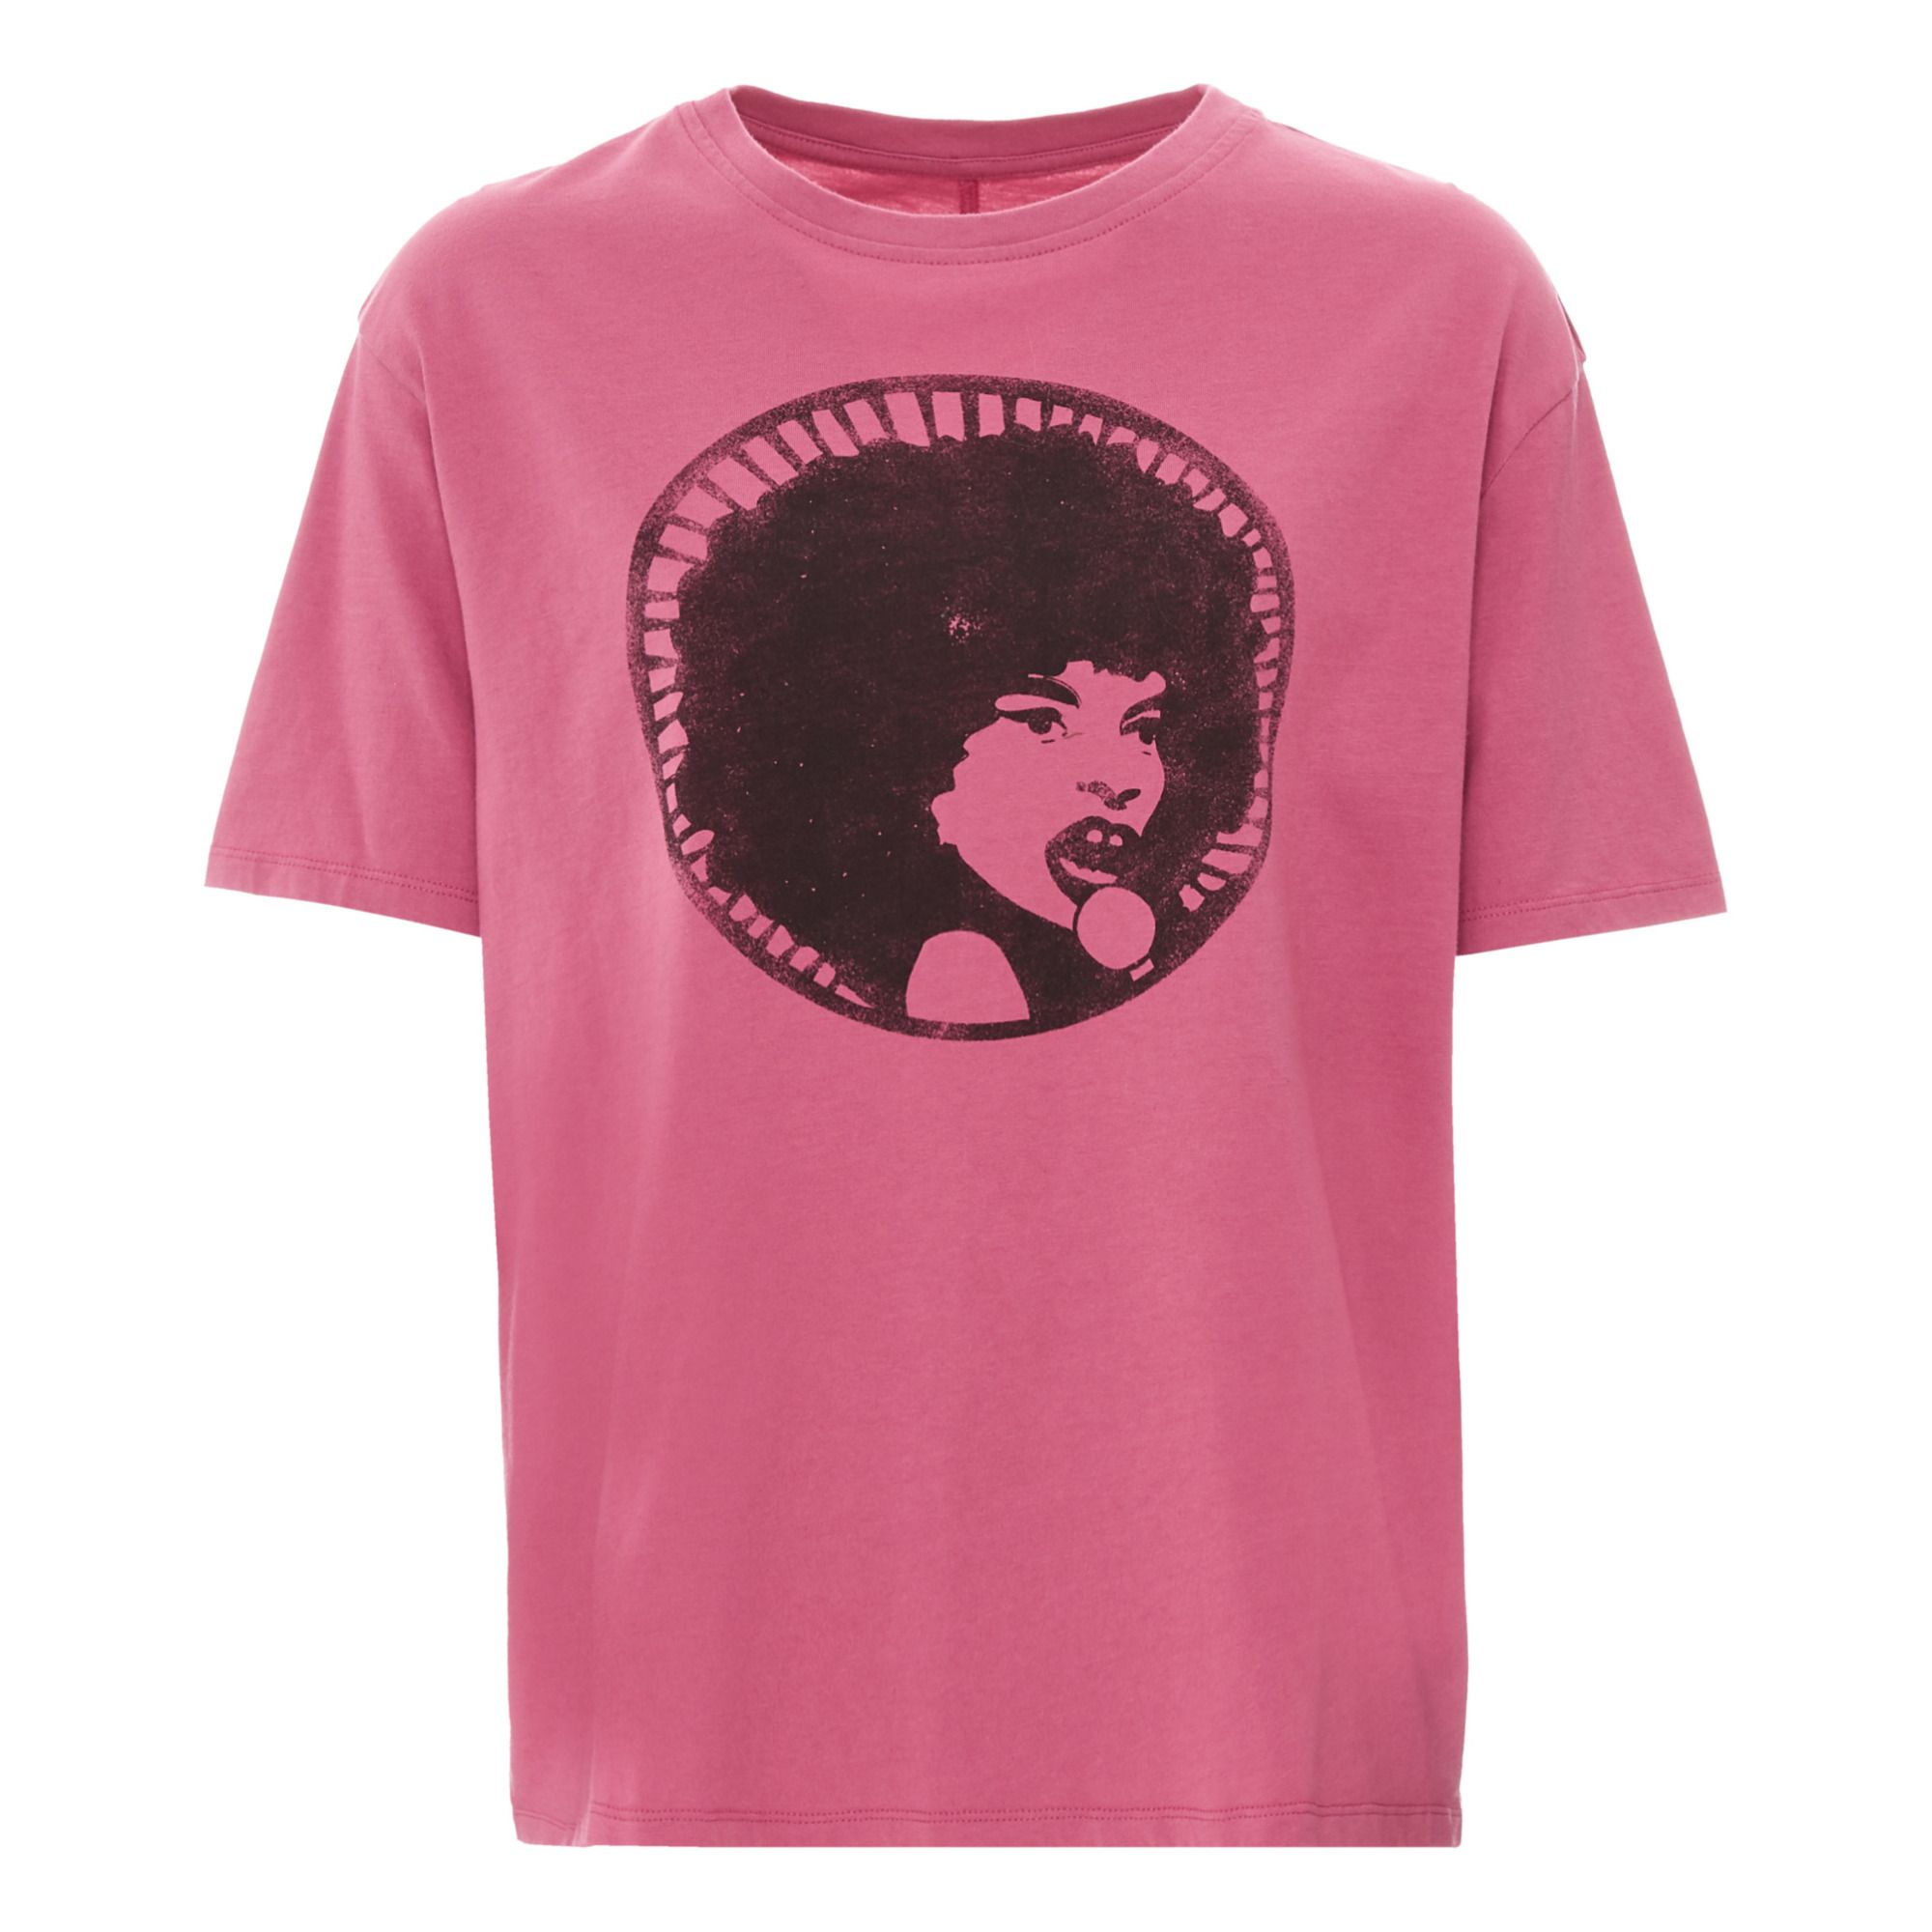 Swildens - T-shirt Djelo Coton Bio - Femme - Rouge framboise